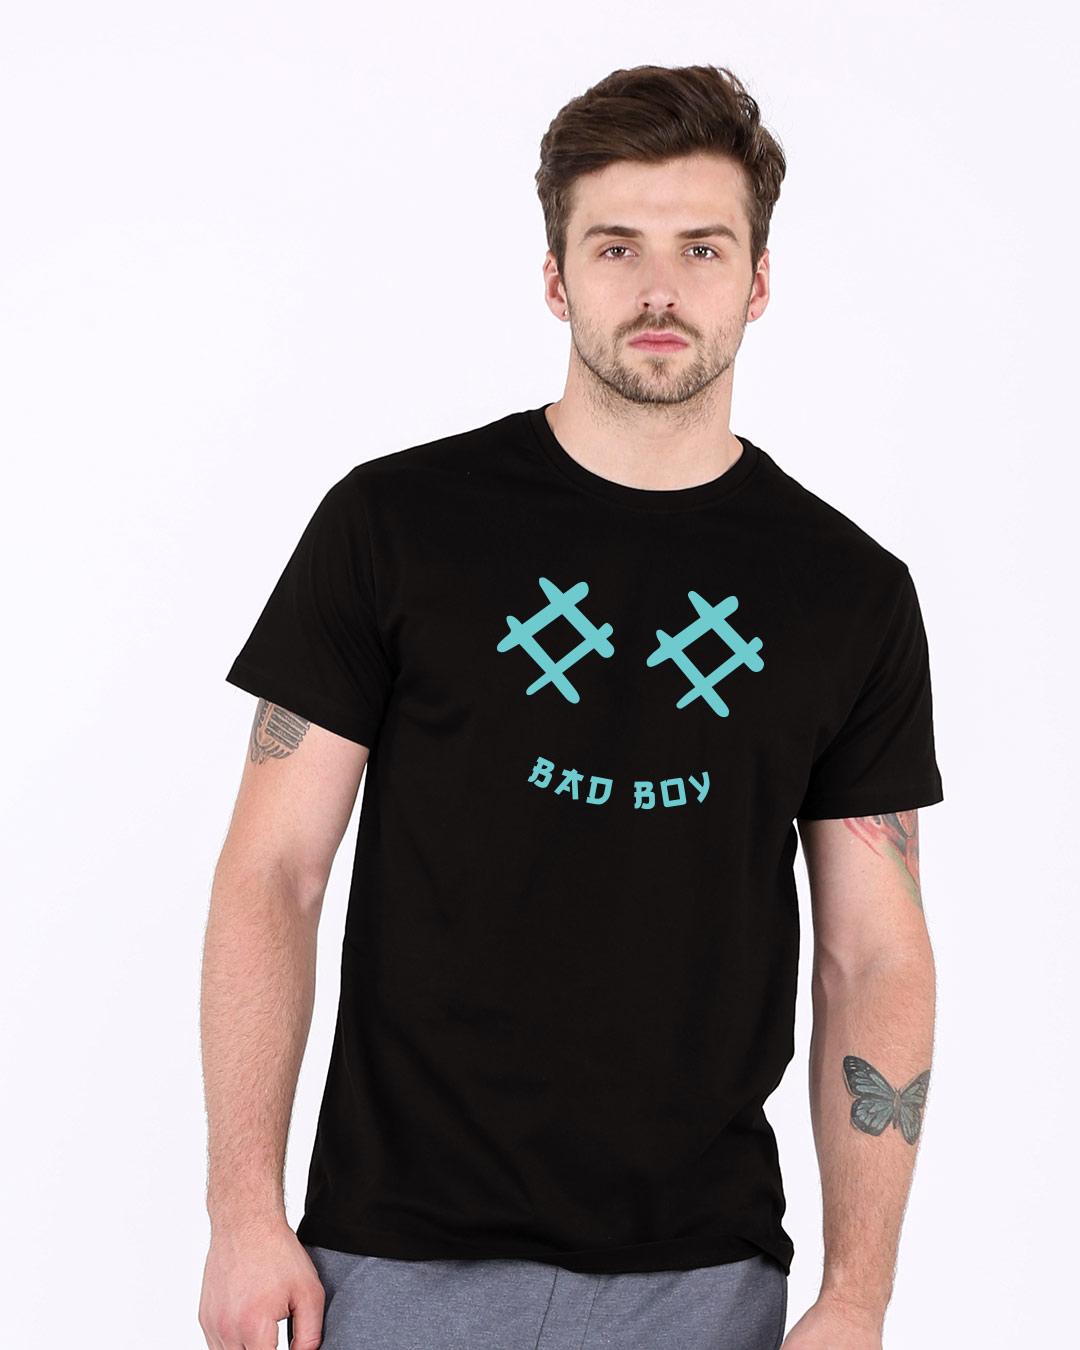 BAD BOY T-Shirts for Men